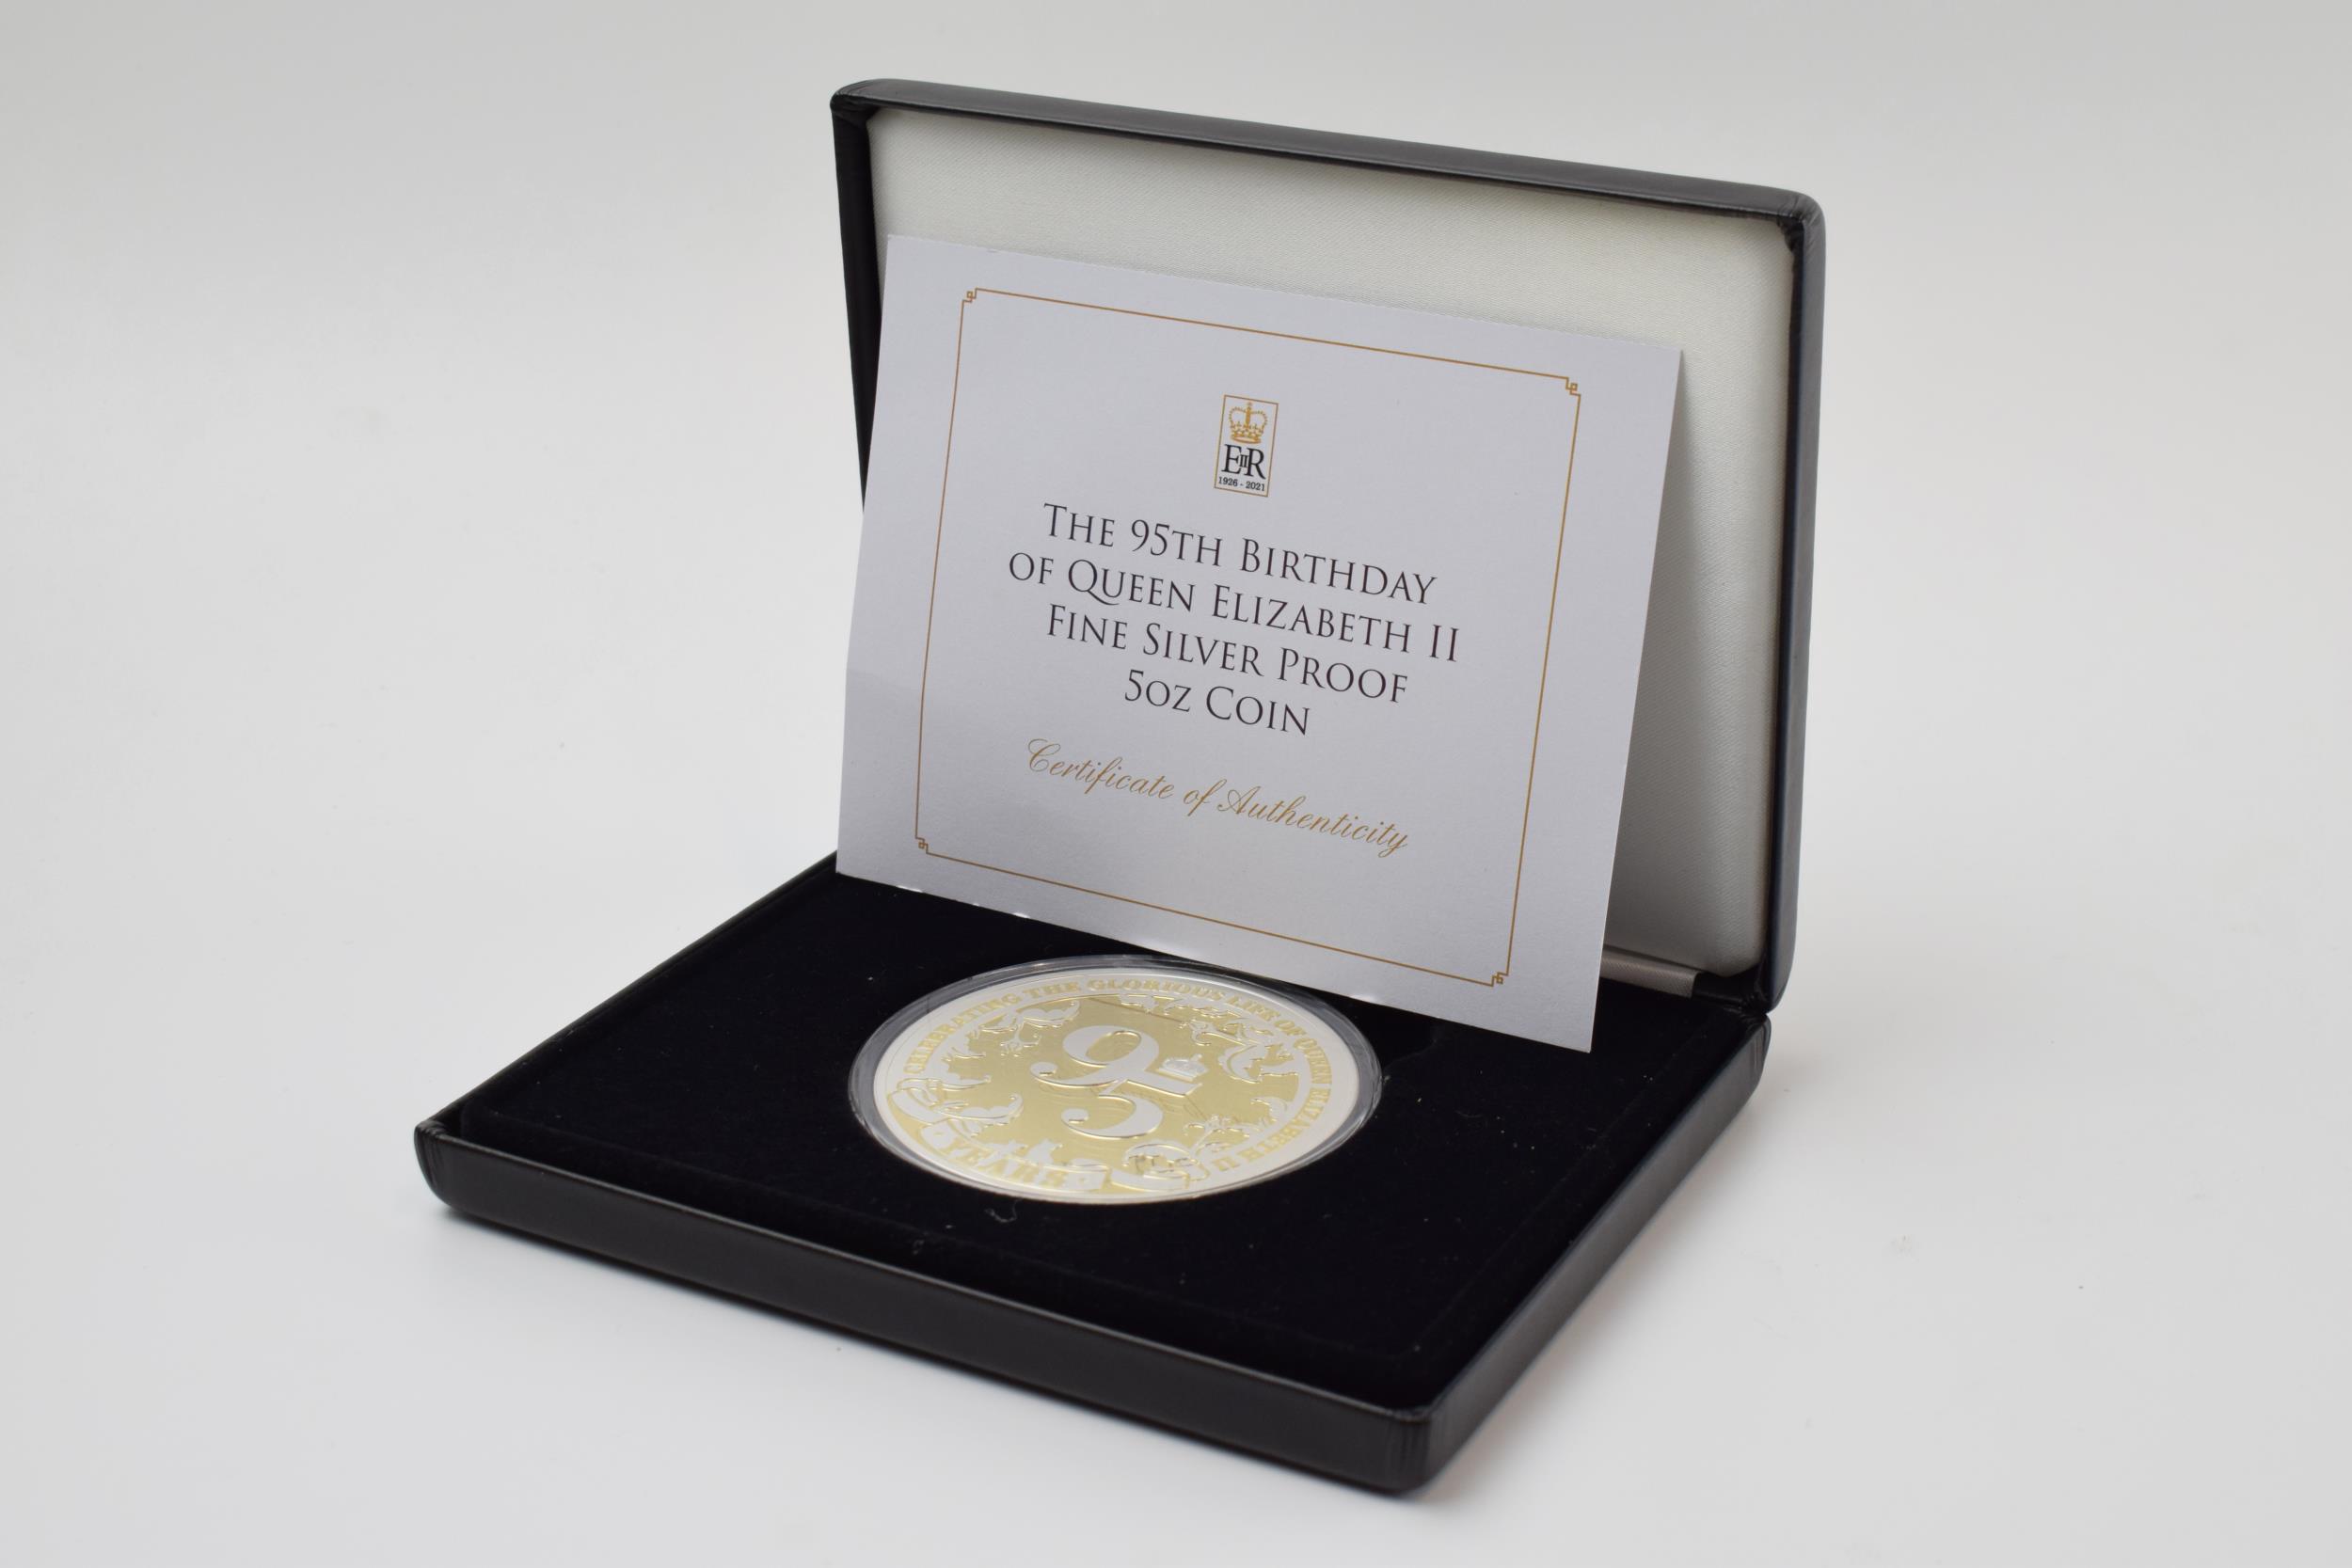 Cased Jubilee Mint Fine Silver Proof 5 oz coin Queen Elizabeth II 95th Birthday, 155.5 grams. - Image 2 of 3